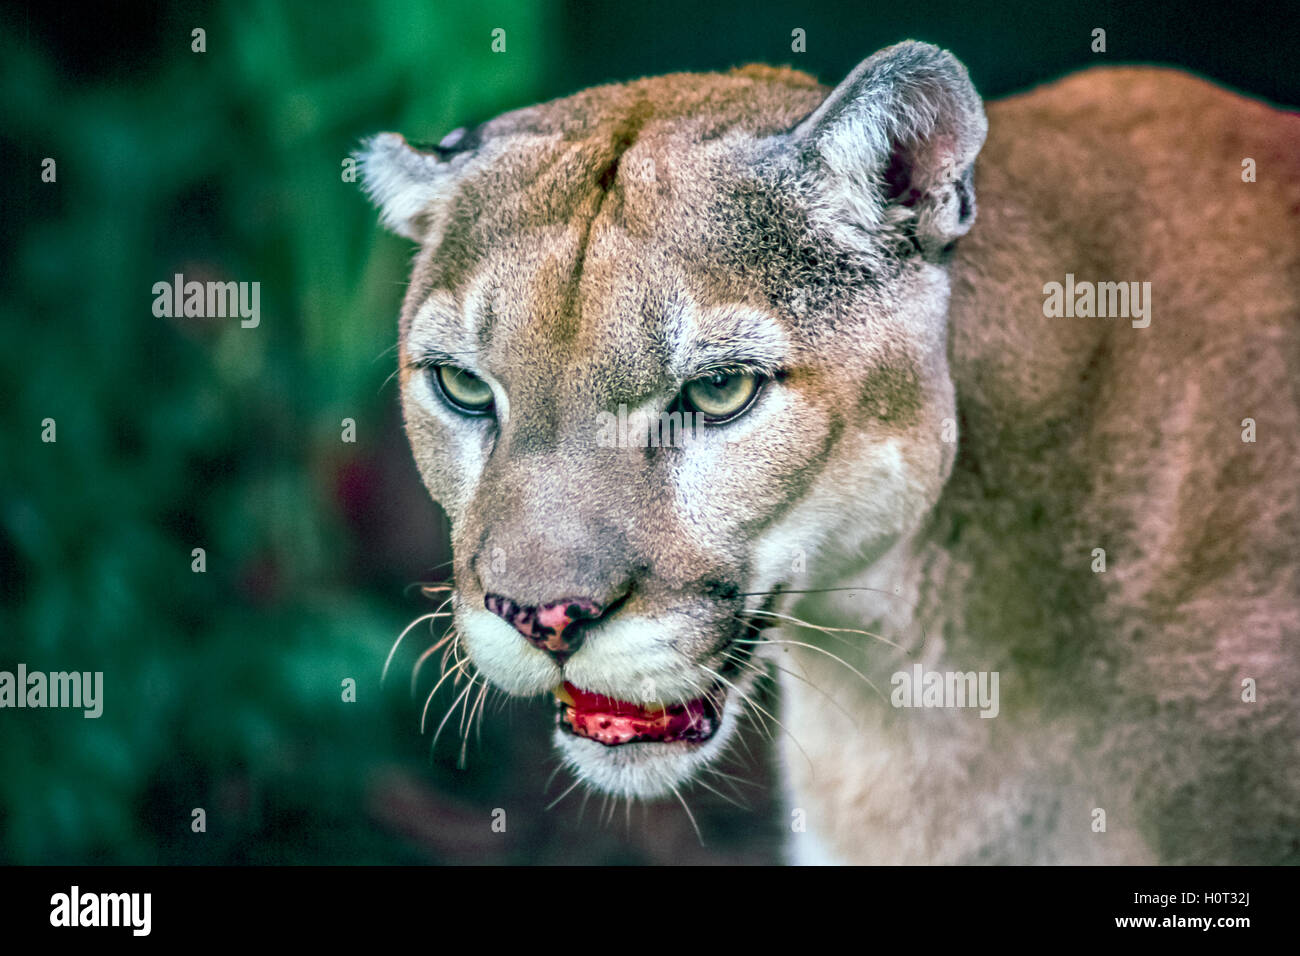 Puma, Puma Concolor, auch bekannt als der Puma, Puma, Panther oder  catamount Stockfotografie - Alamy